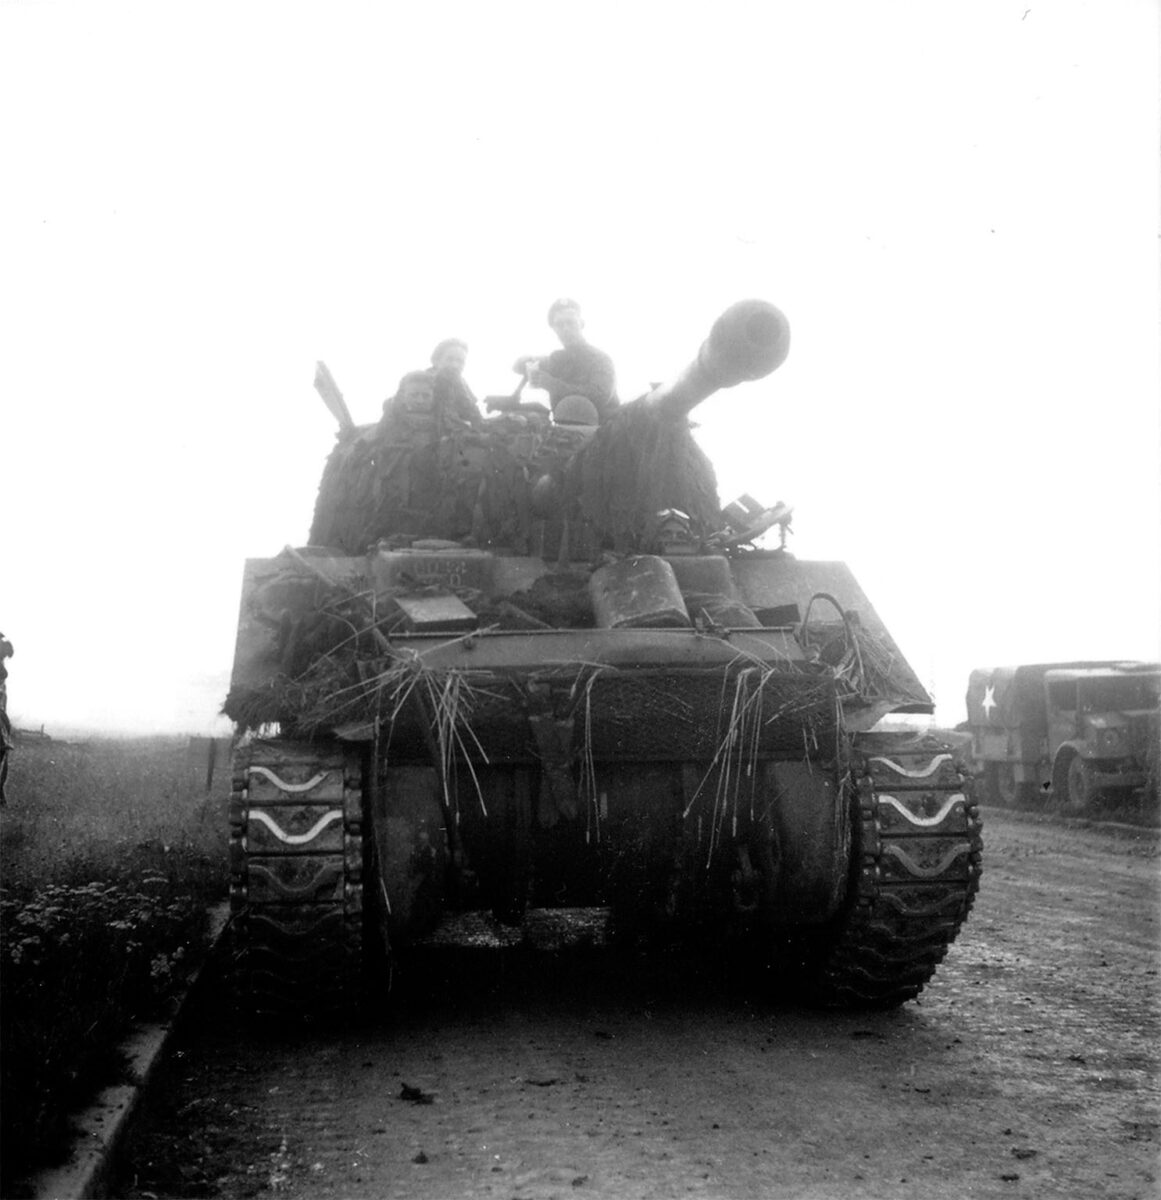 Medium tank M4 Sherman Firefly